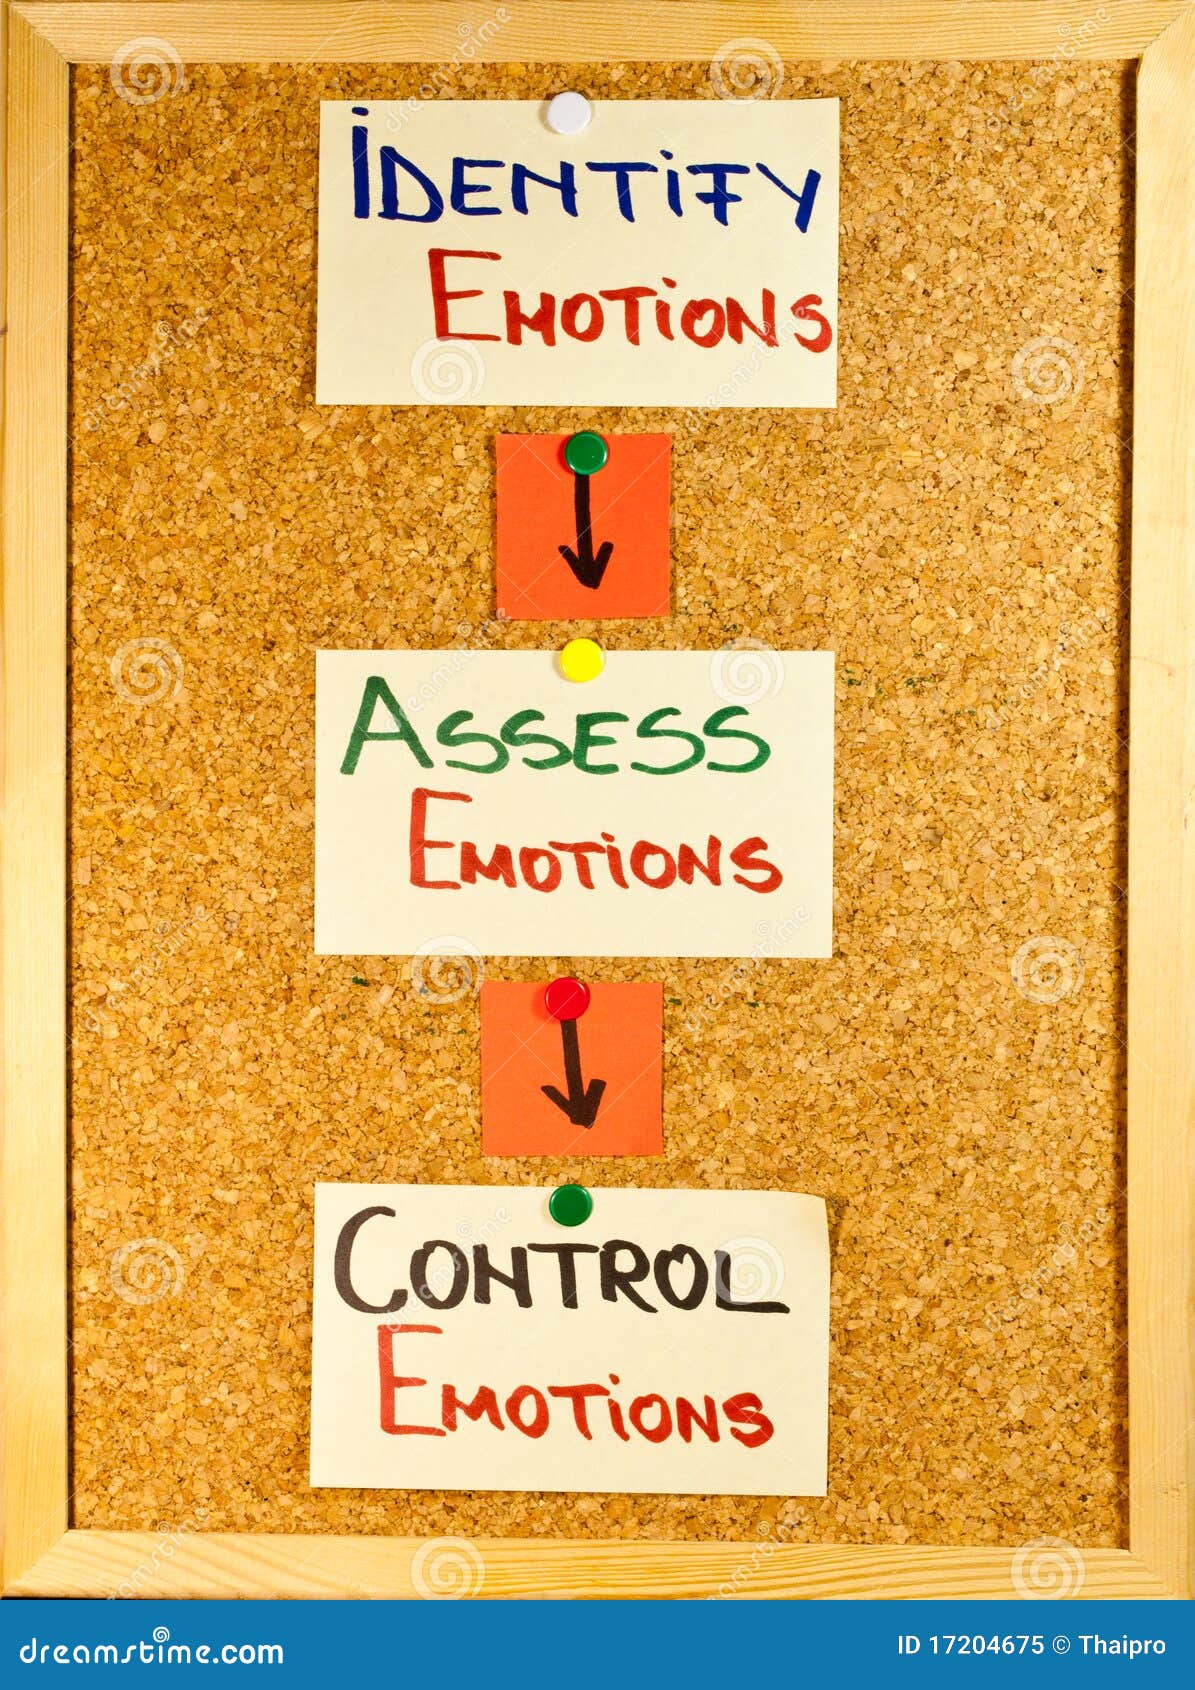 emotional intelligence stages